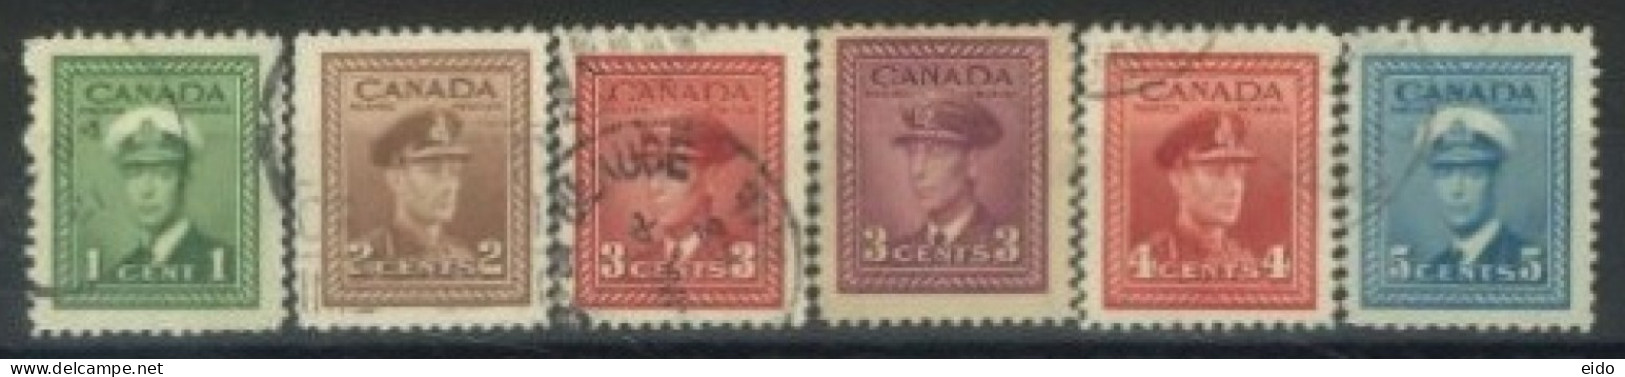 CANADA - 1942, KING GEORGE VI IN NAVAL UNIFORM STAMPS SET OF 6, USED. - Usados